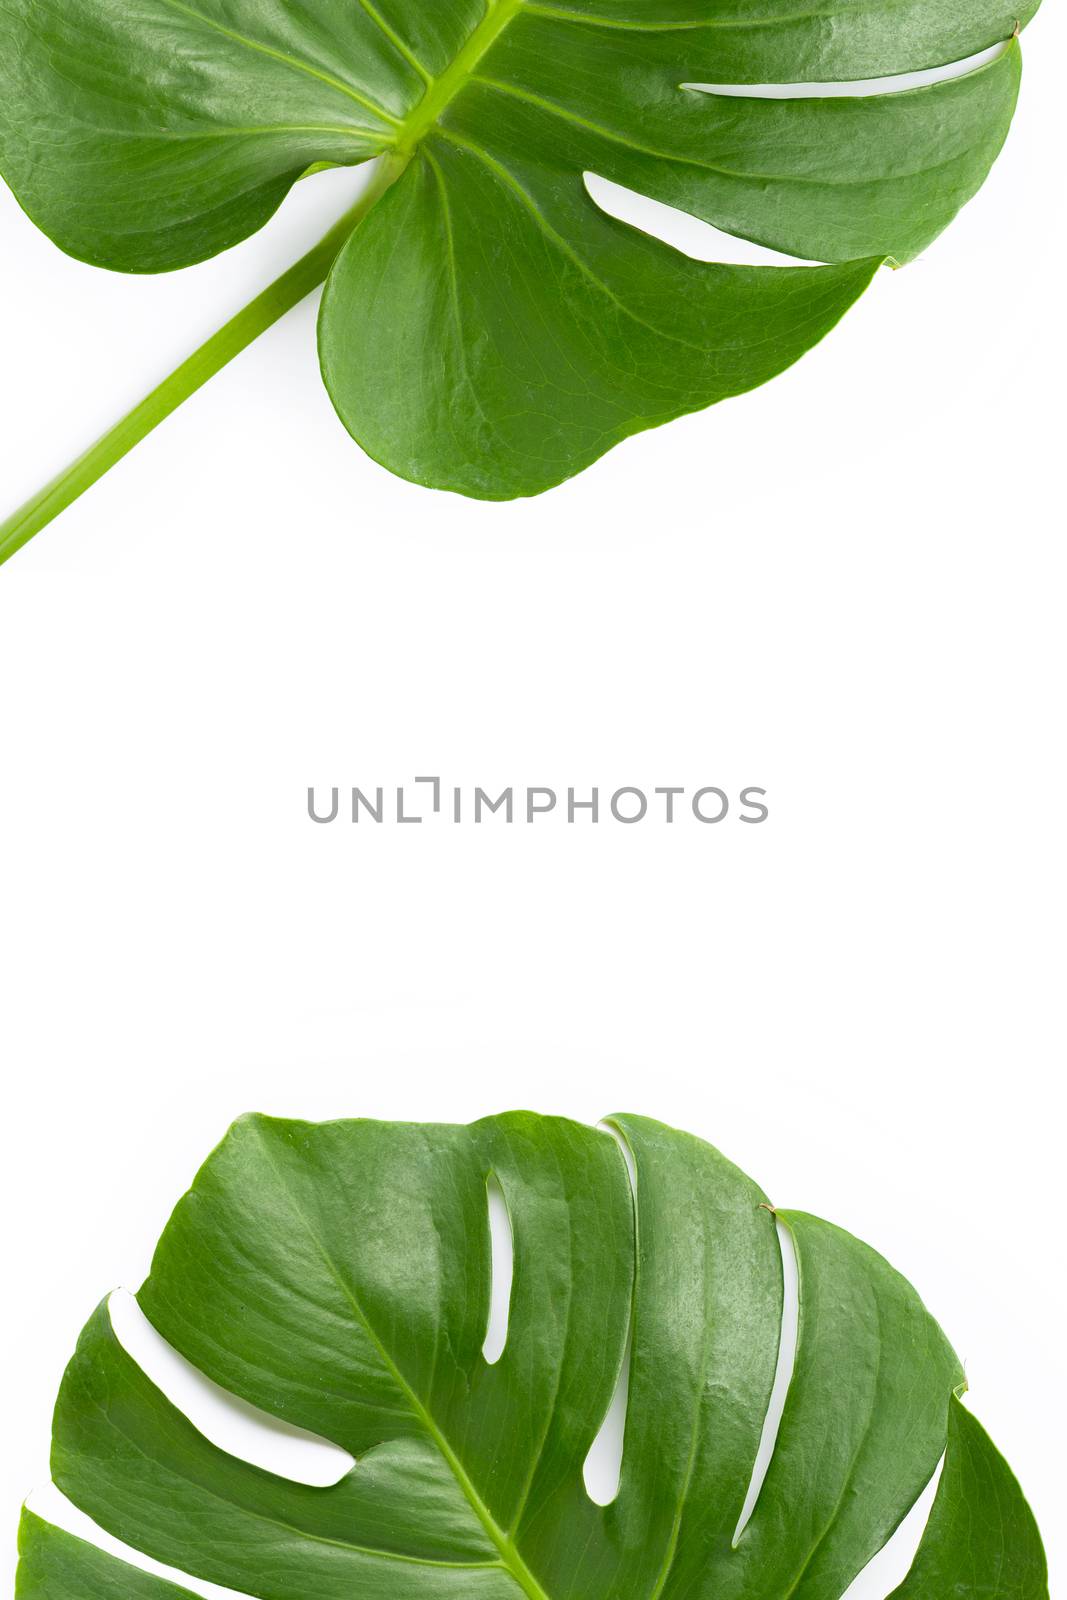 Monstera plant leaves on white background